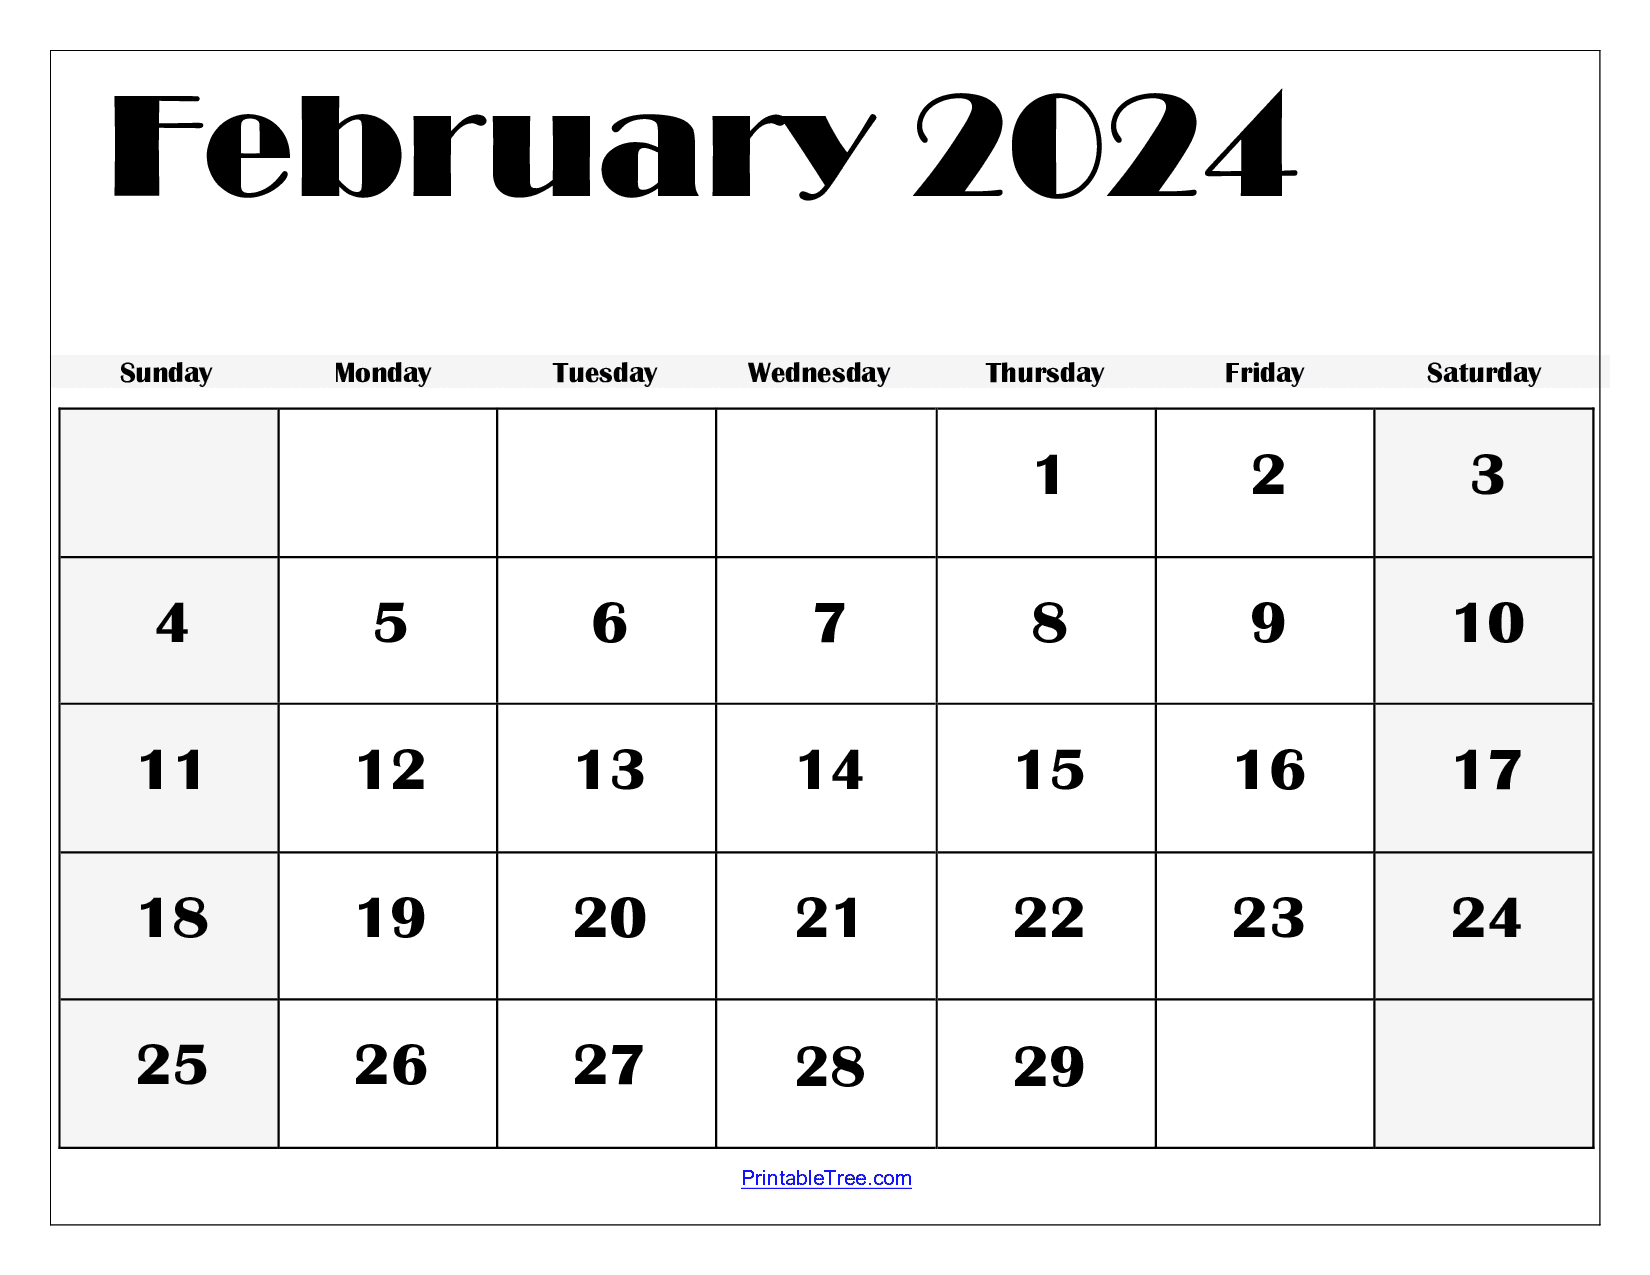 February 2024 Calendar Printable Pdf Template With Holidays for Printable Monthly Calendar February 2024